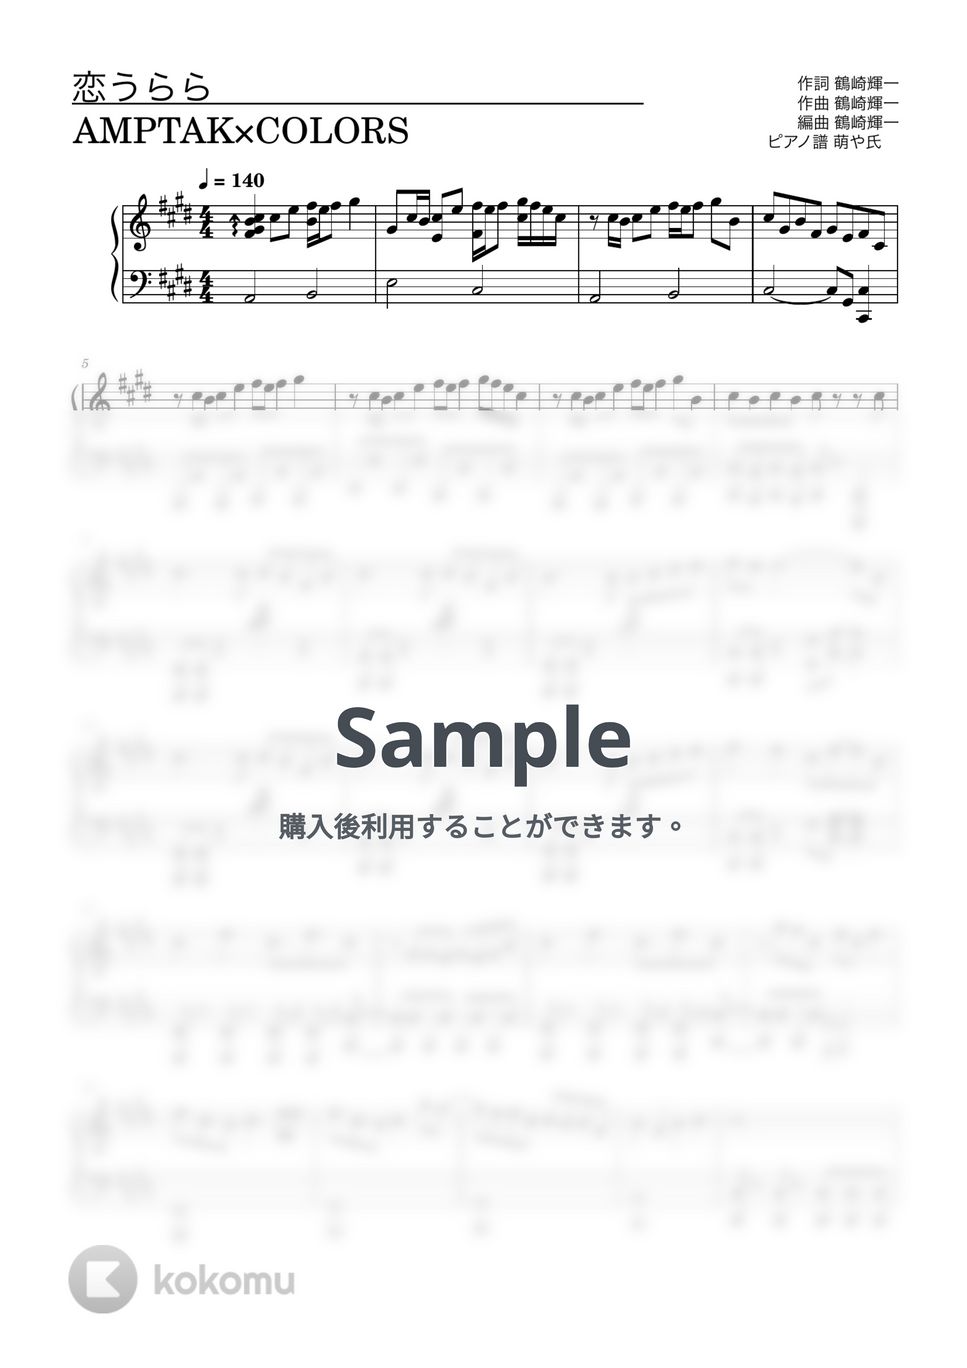 AMPTAK×COLORS - 恋うらら (ピアノソロ譜) by 萌や氏